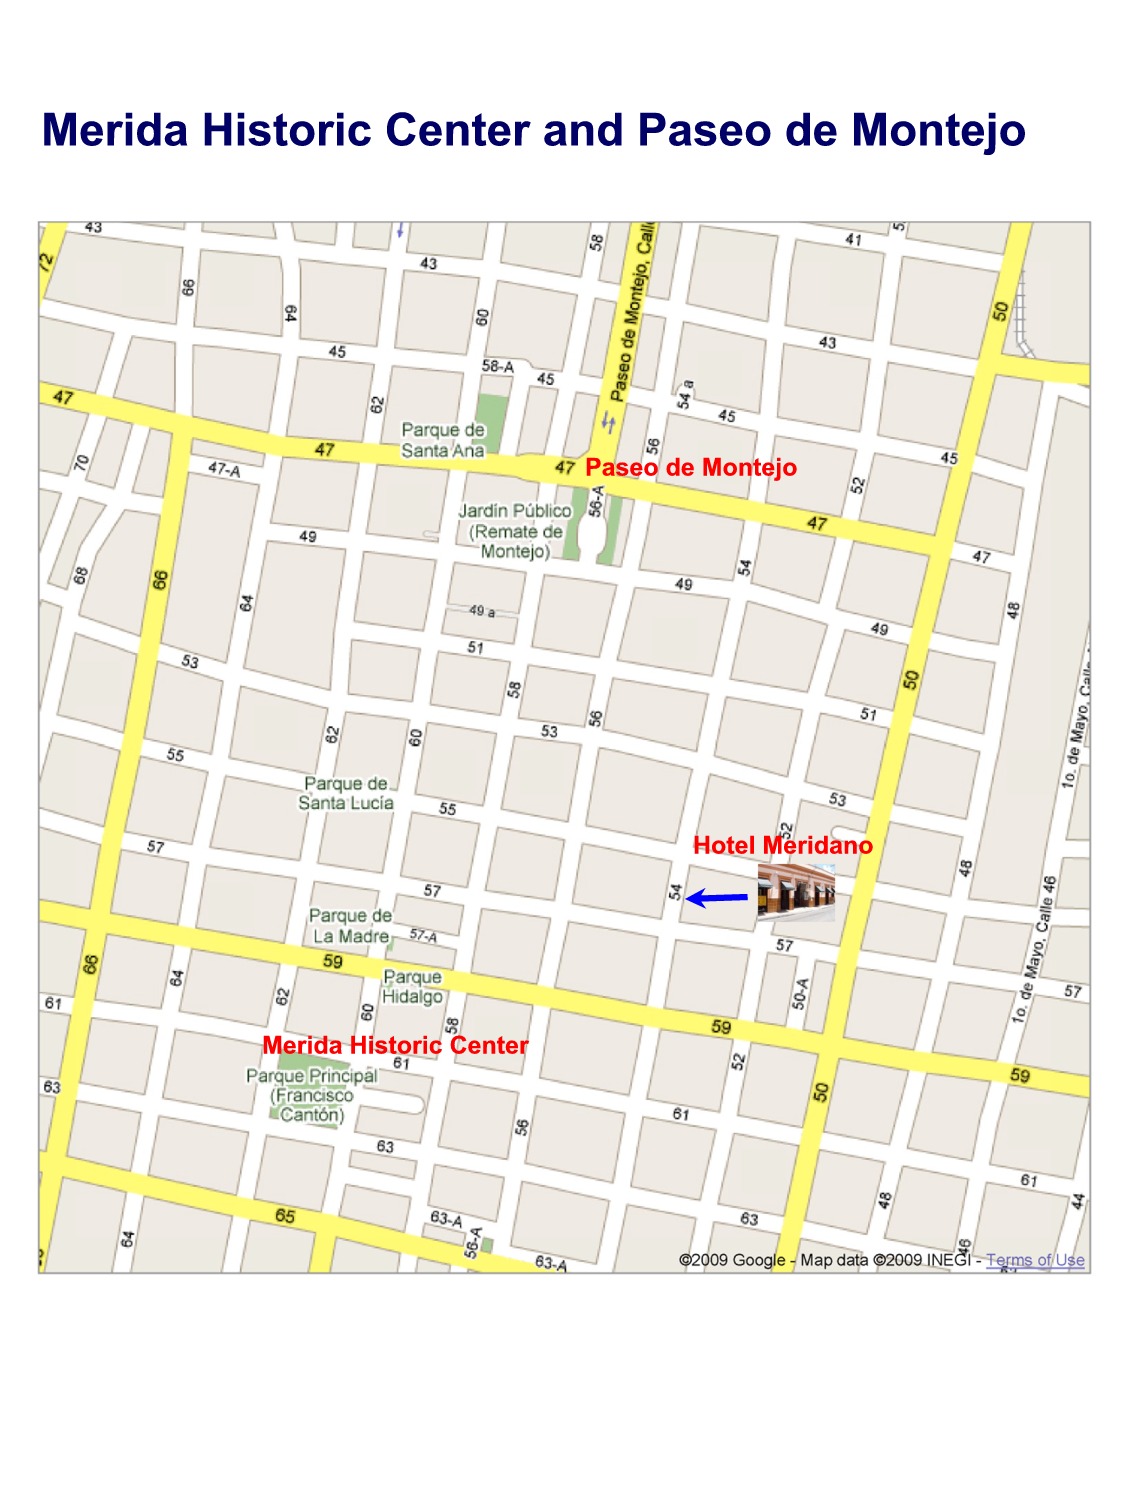 Hotel Meridano historic center Paseo de Montejo directions large map